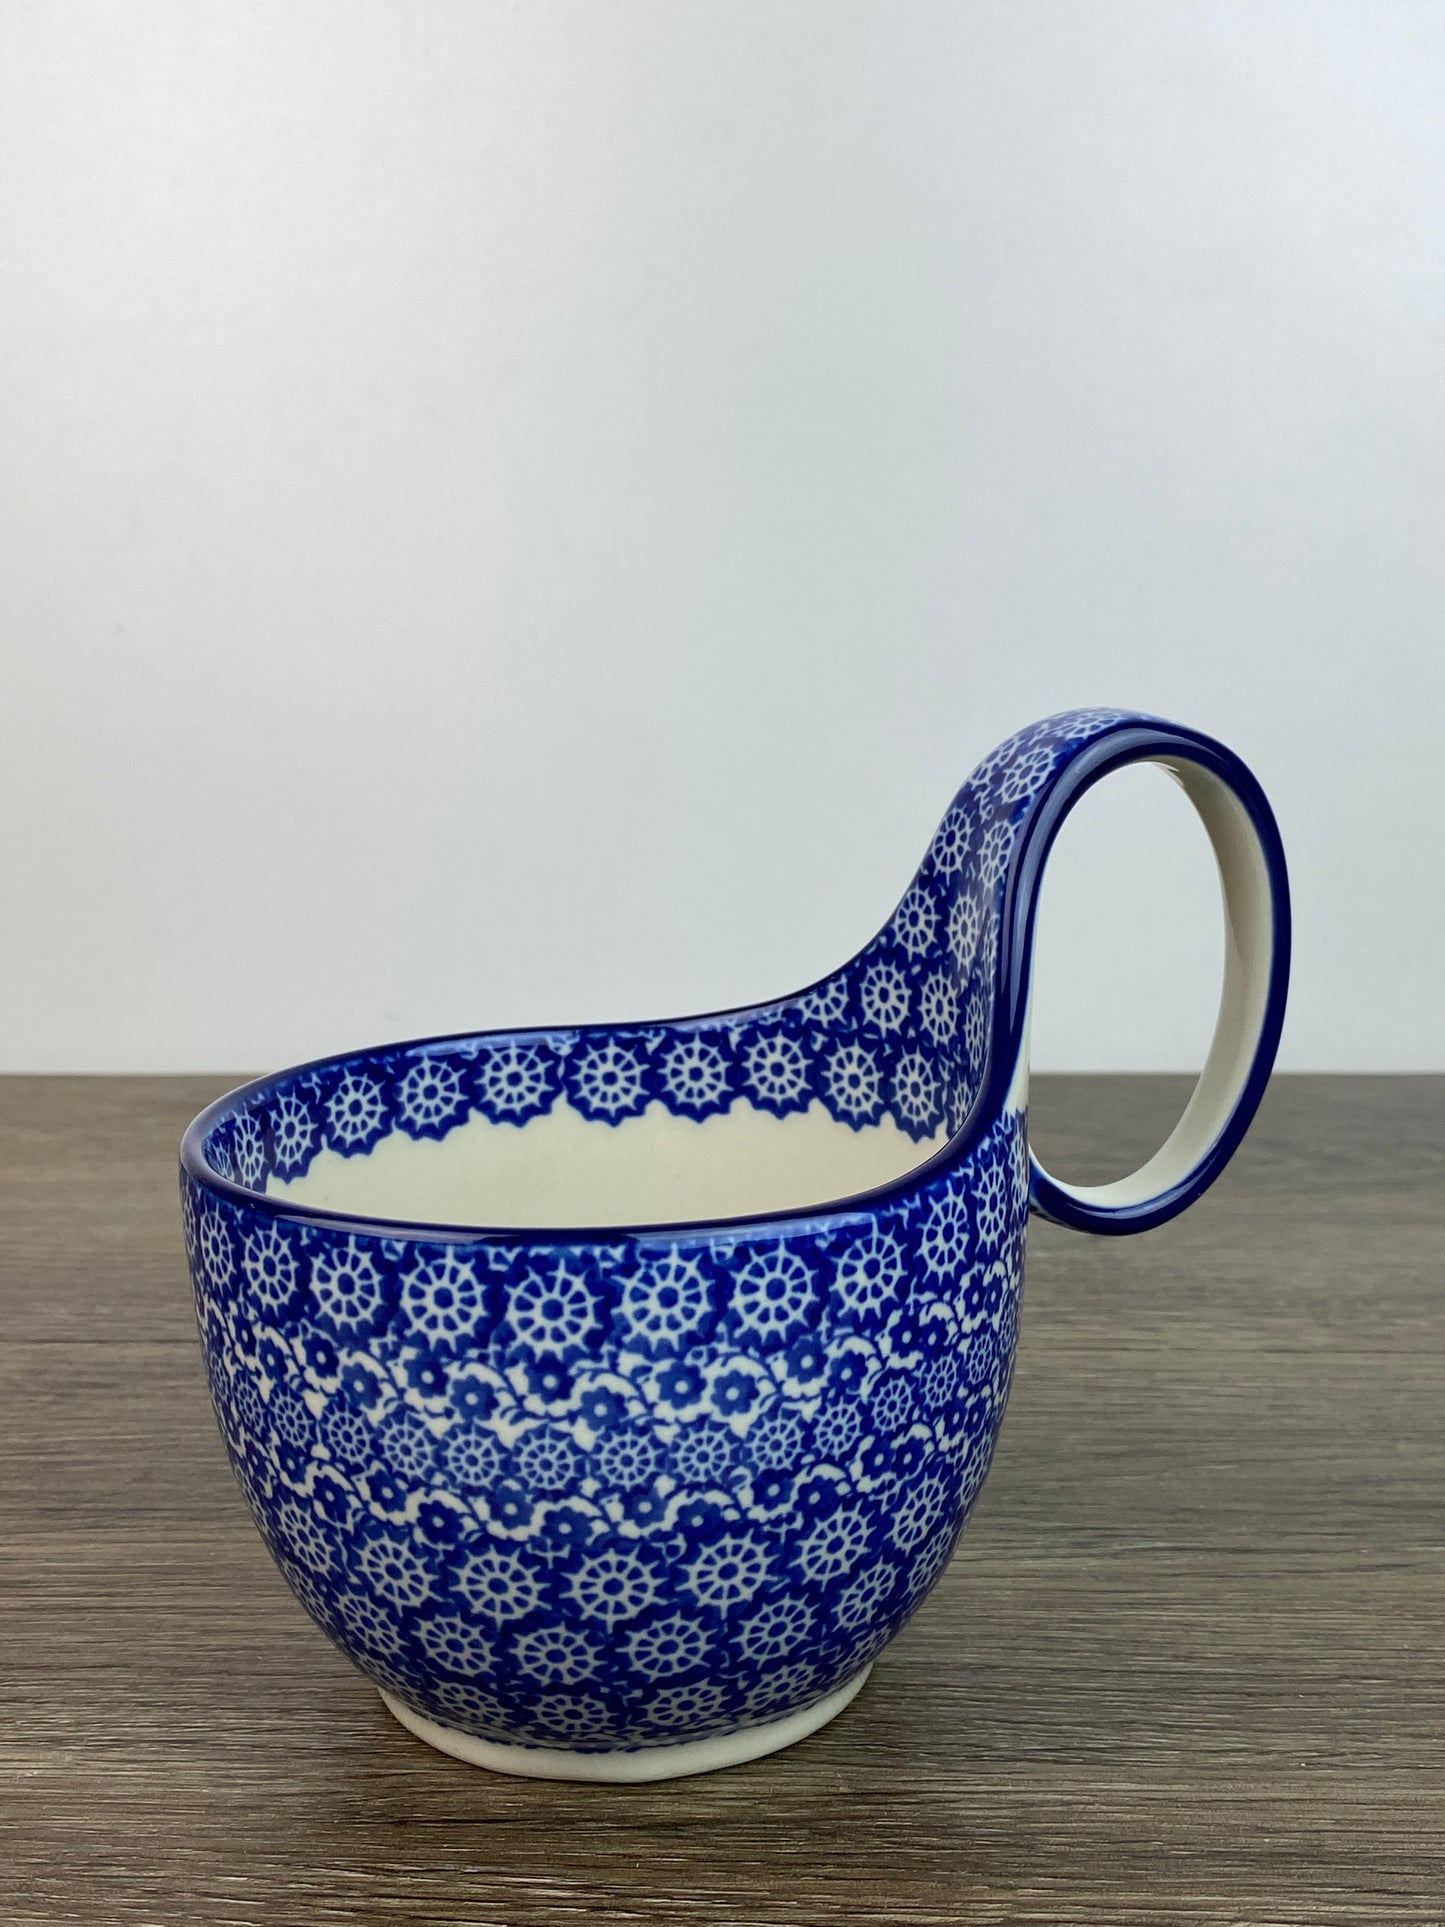 SALE Soup Mug - Shape 845 - Pattern 2615